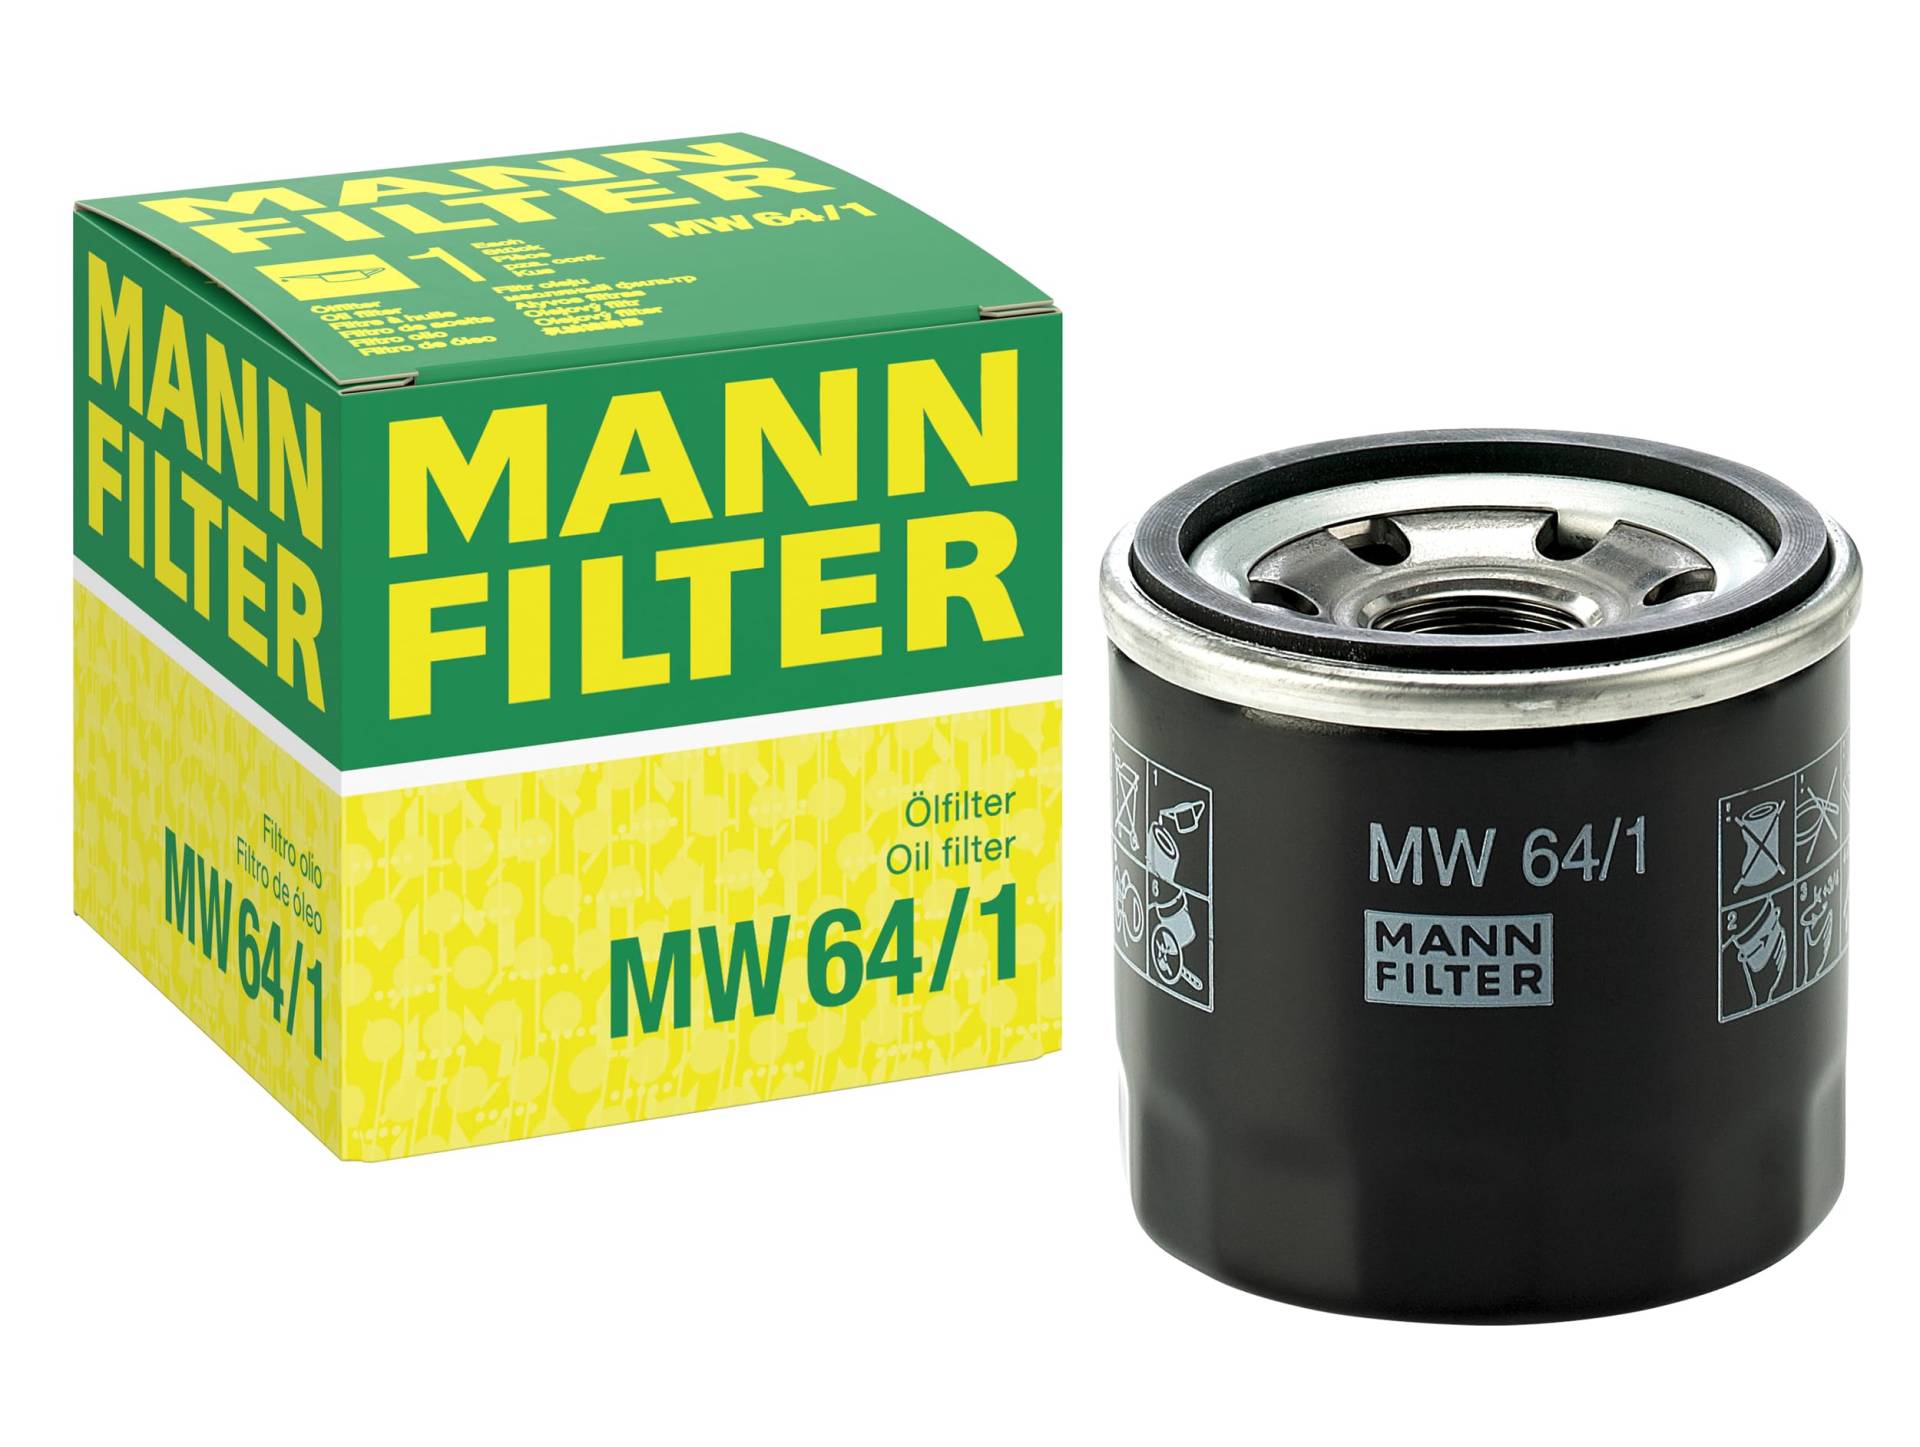 MANN-FILTER MW 64/1 - Motorrad-Ölwechselfilter Ölfilter – Für Motorräder von MANN-FILTER